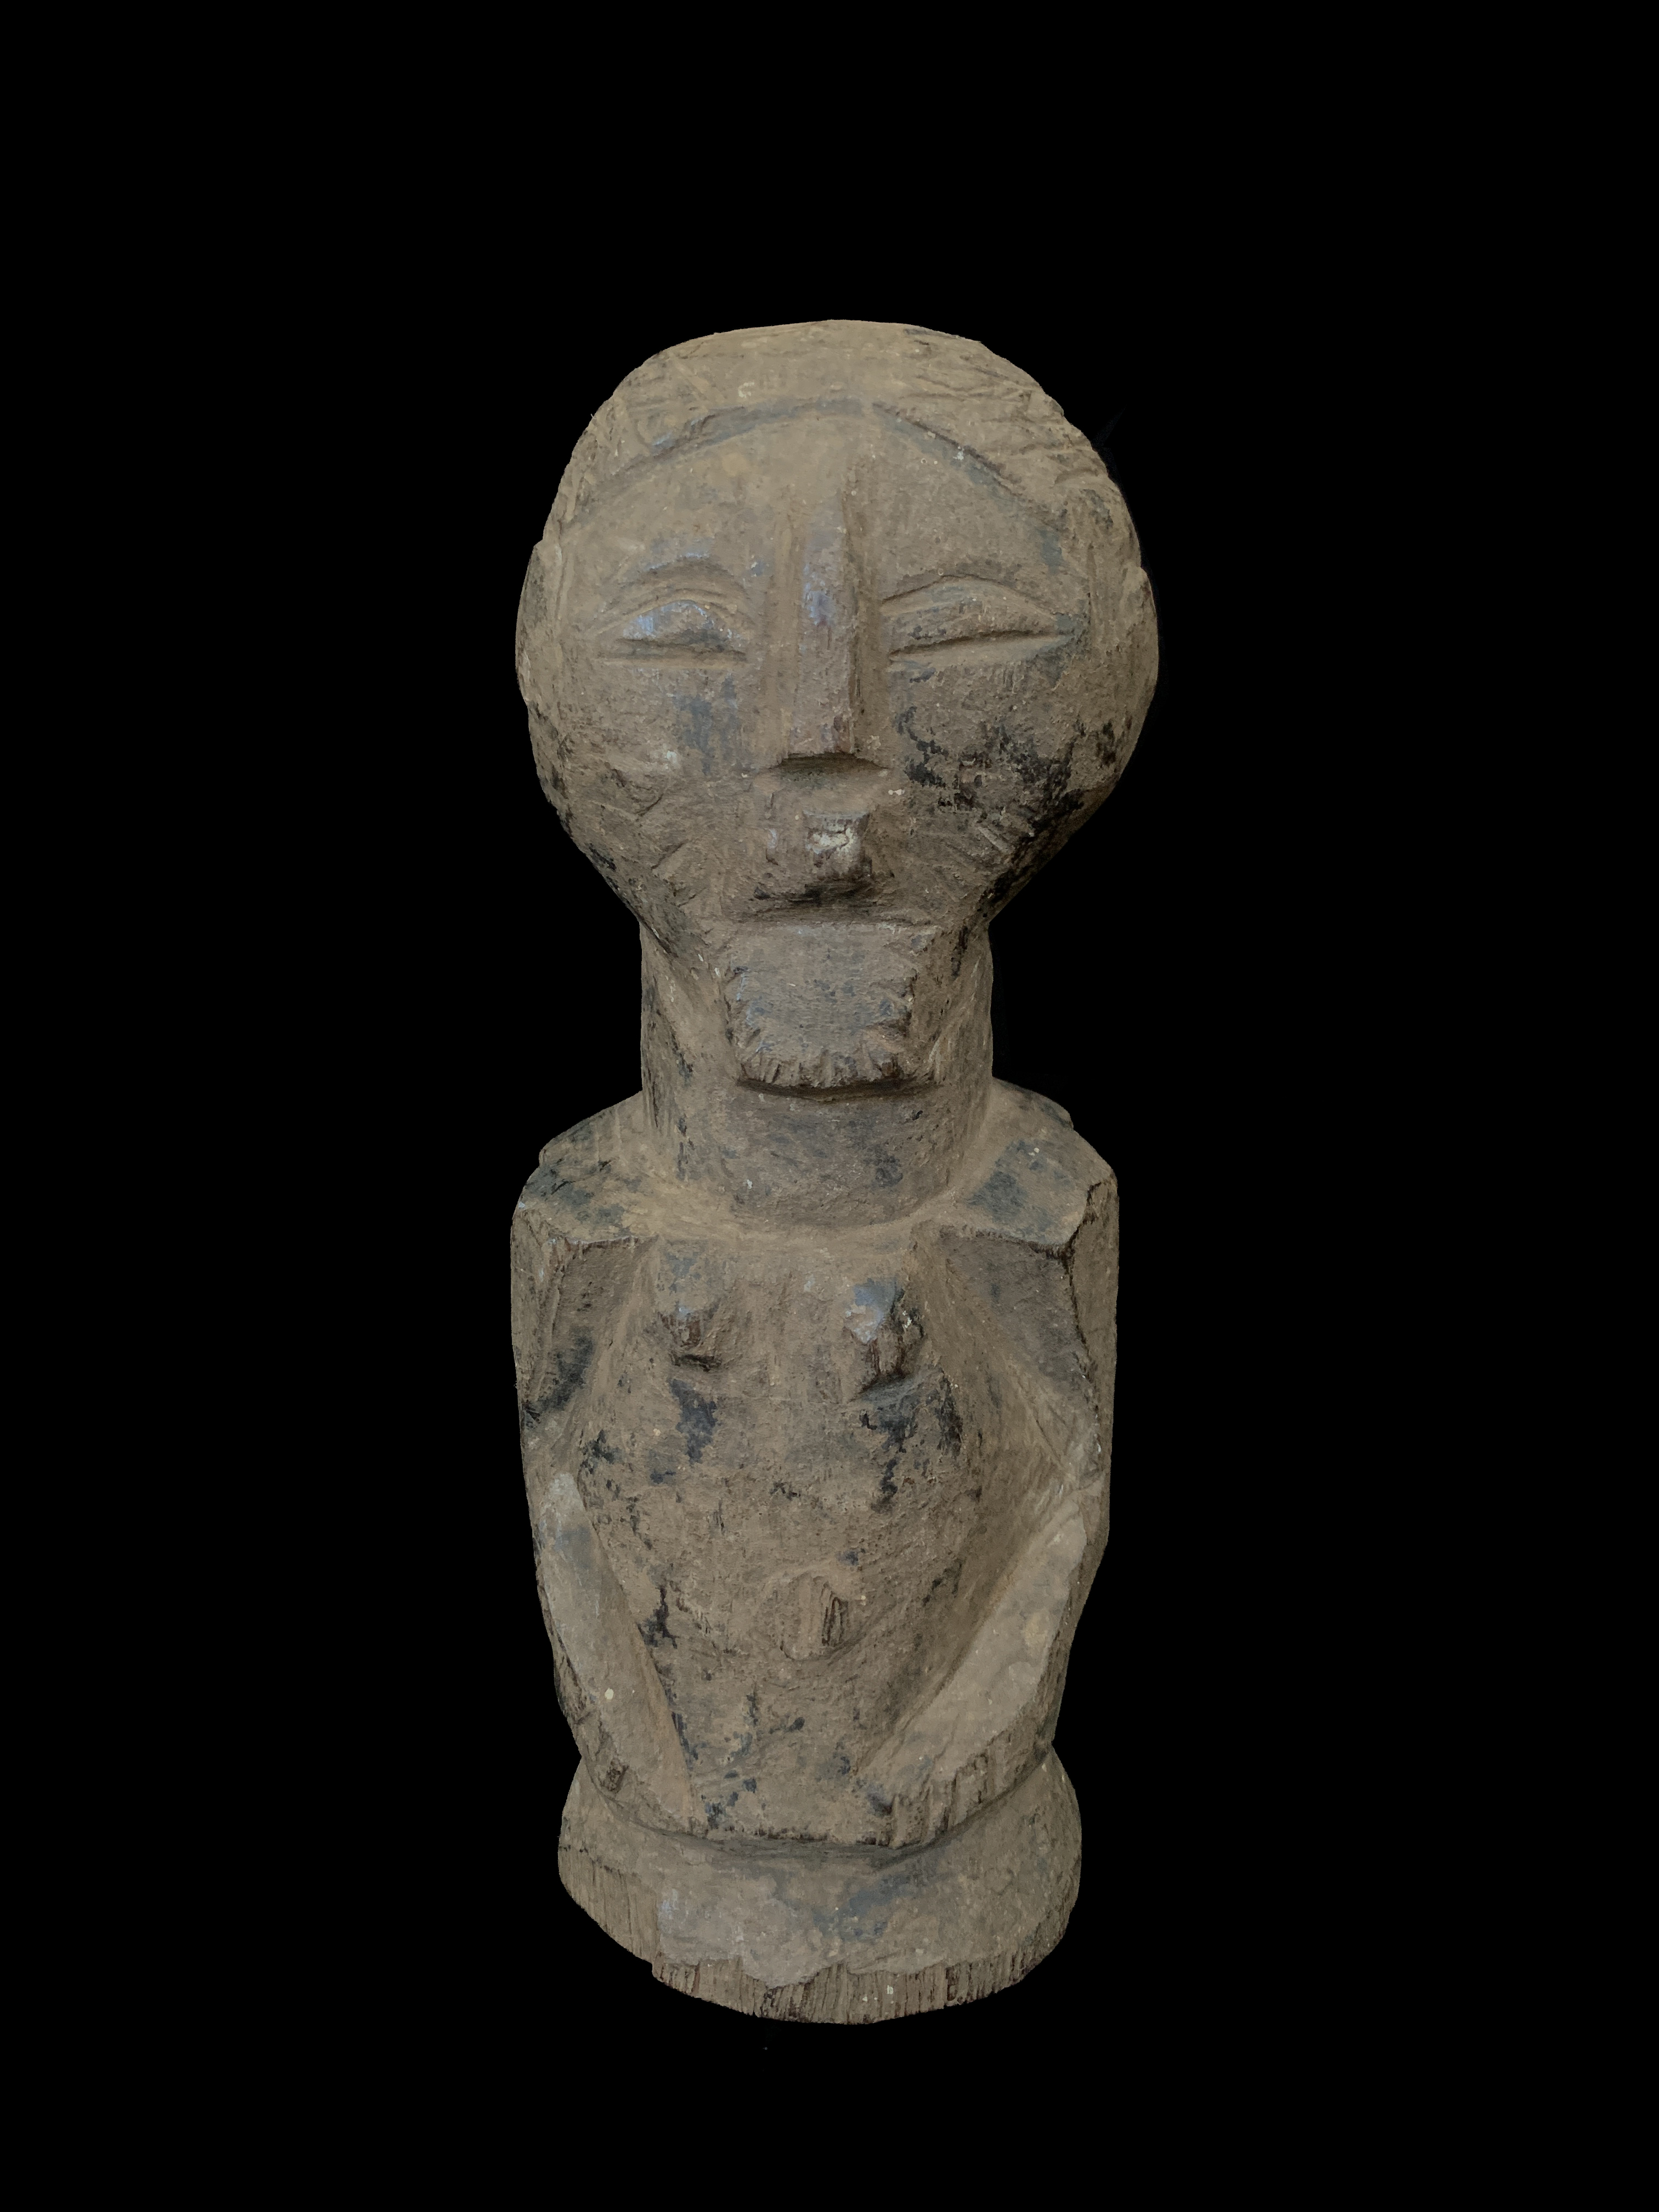 Personal Magical Fetish Figure - Songye People, D.R. Congo